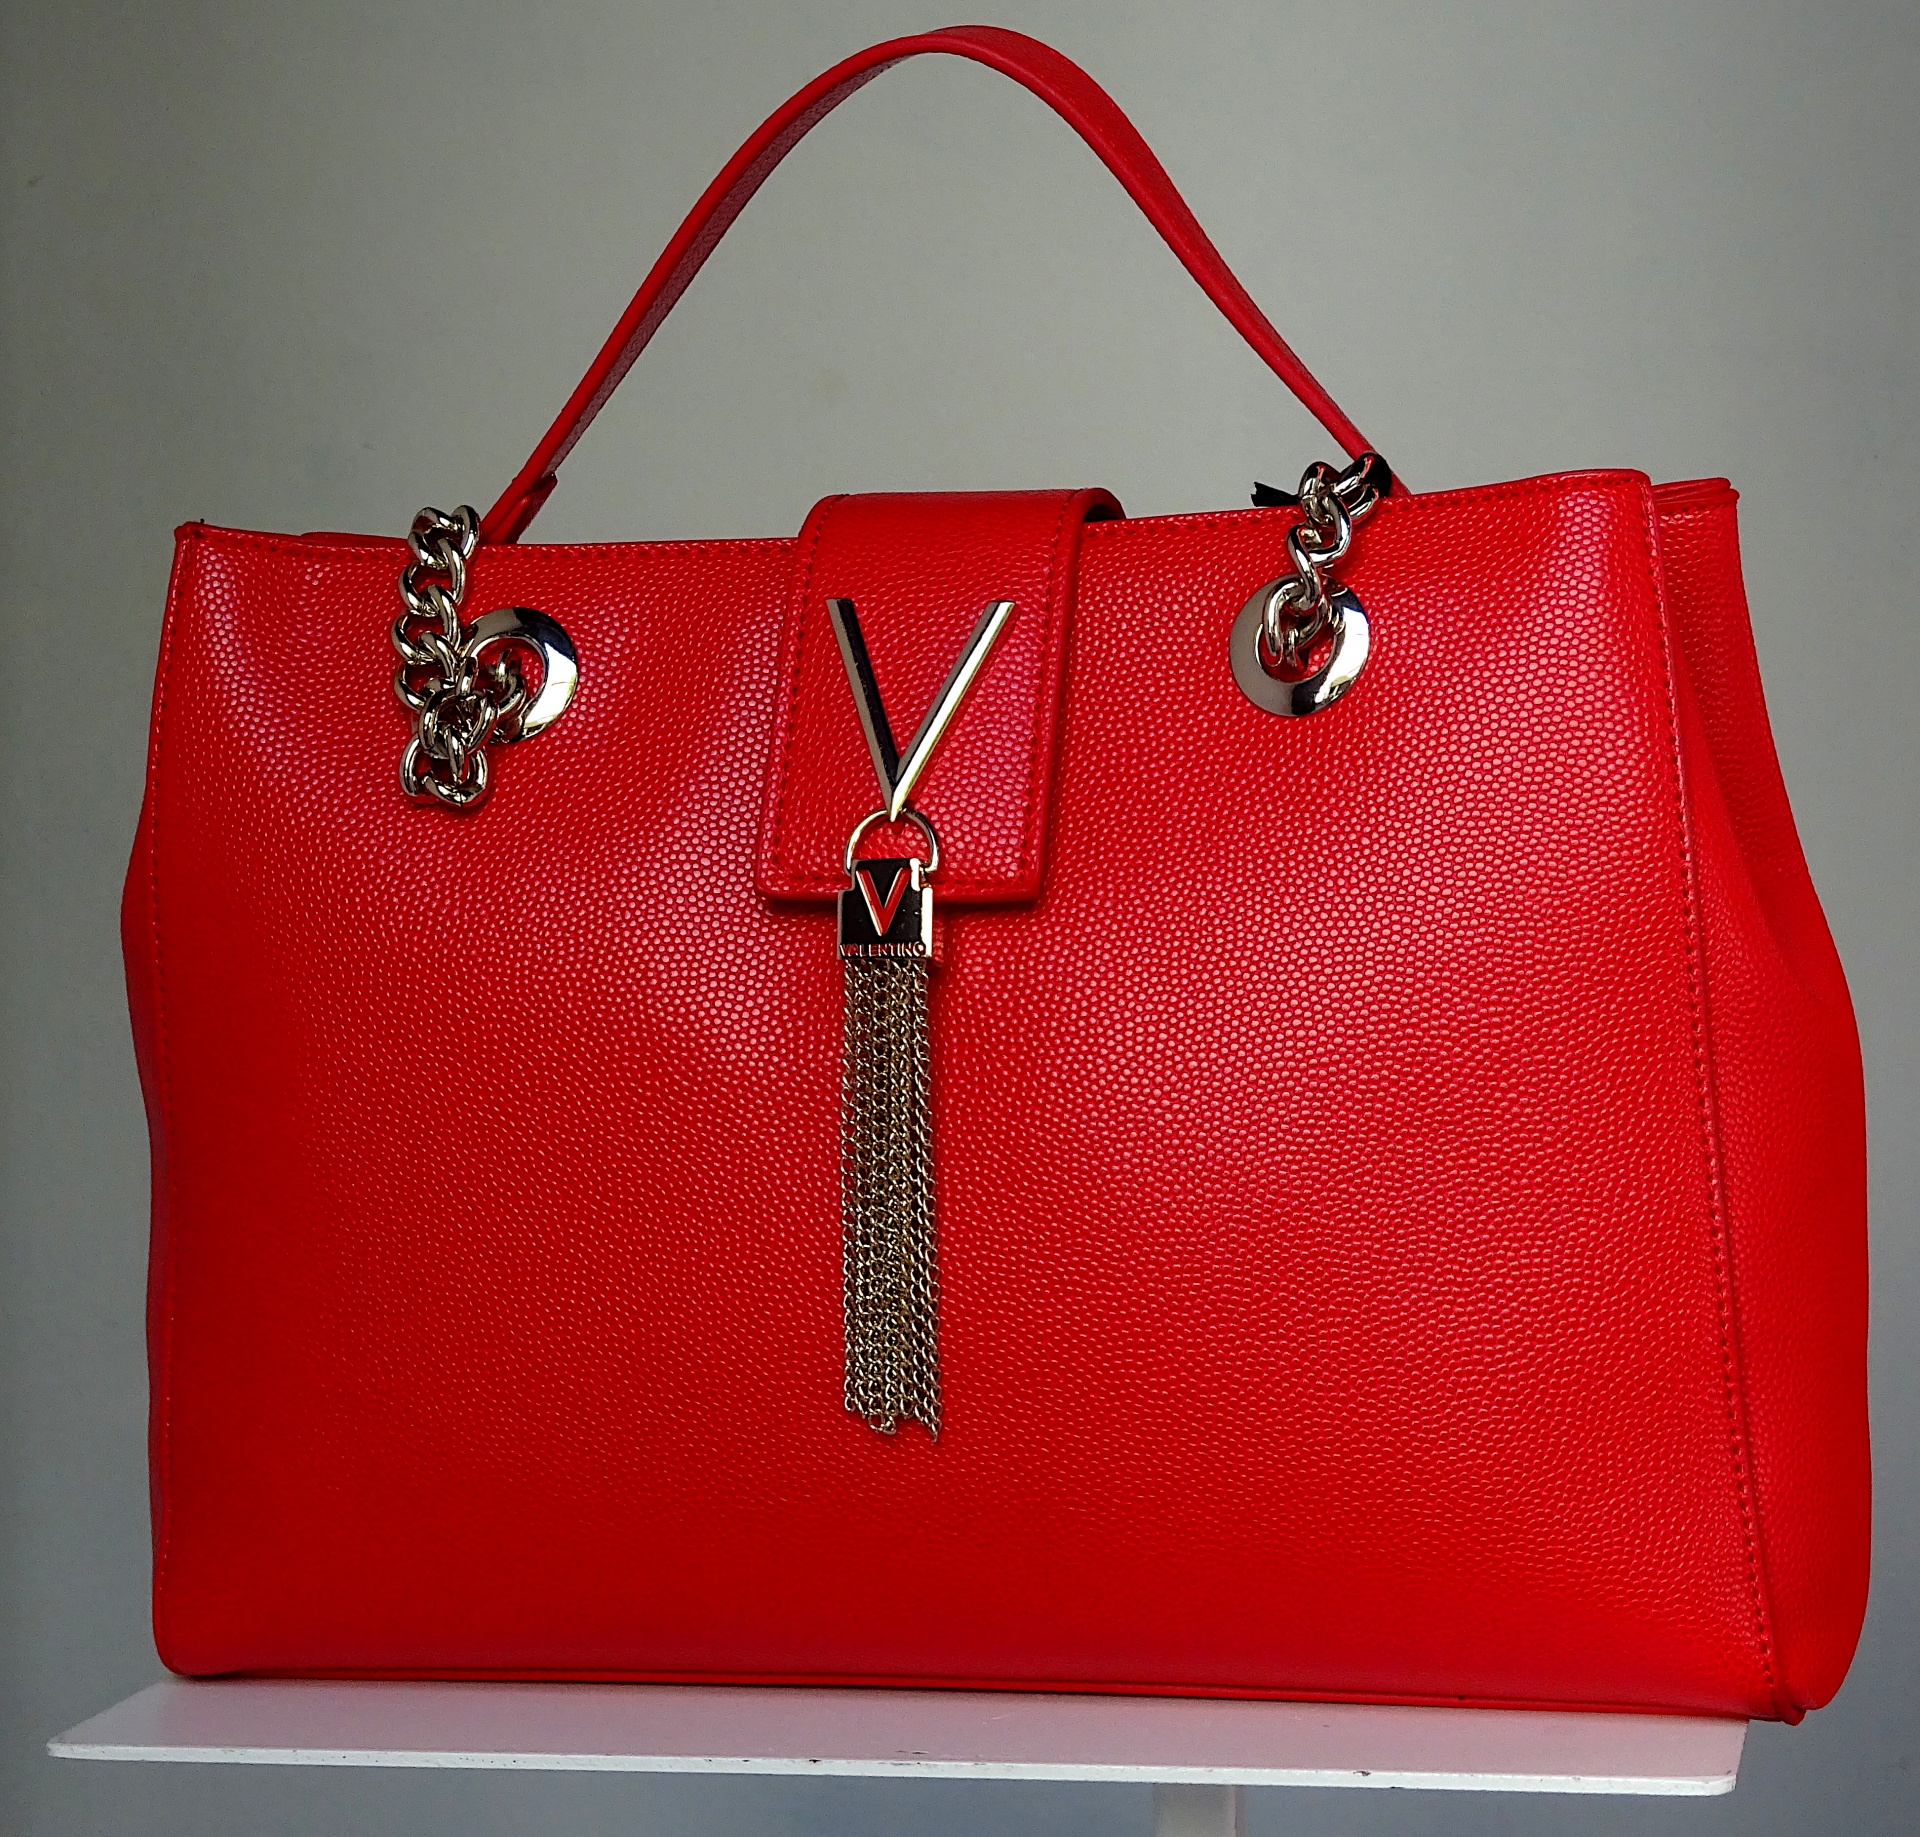 Ladies Red Handbag Free Stock Photo - Public Domain Pictures